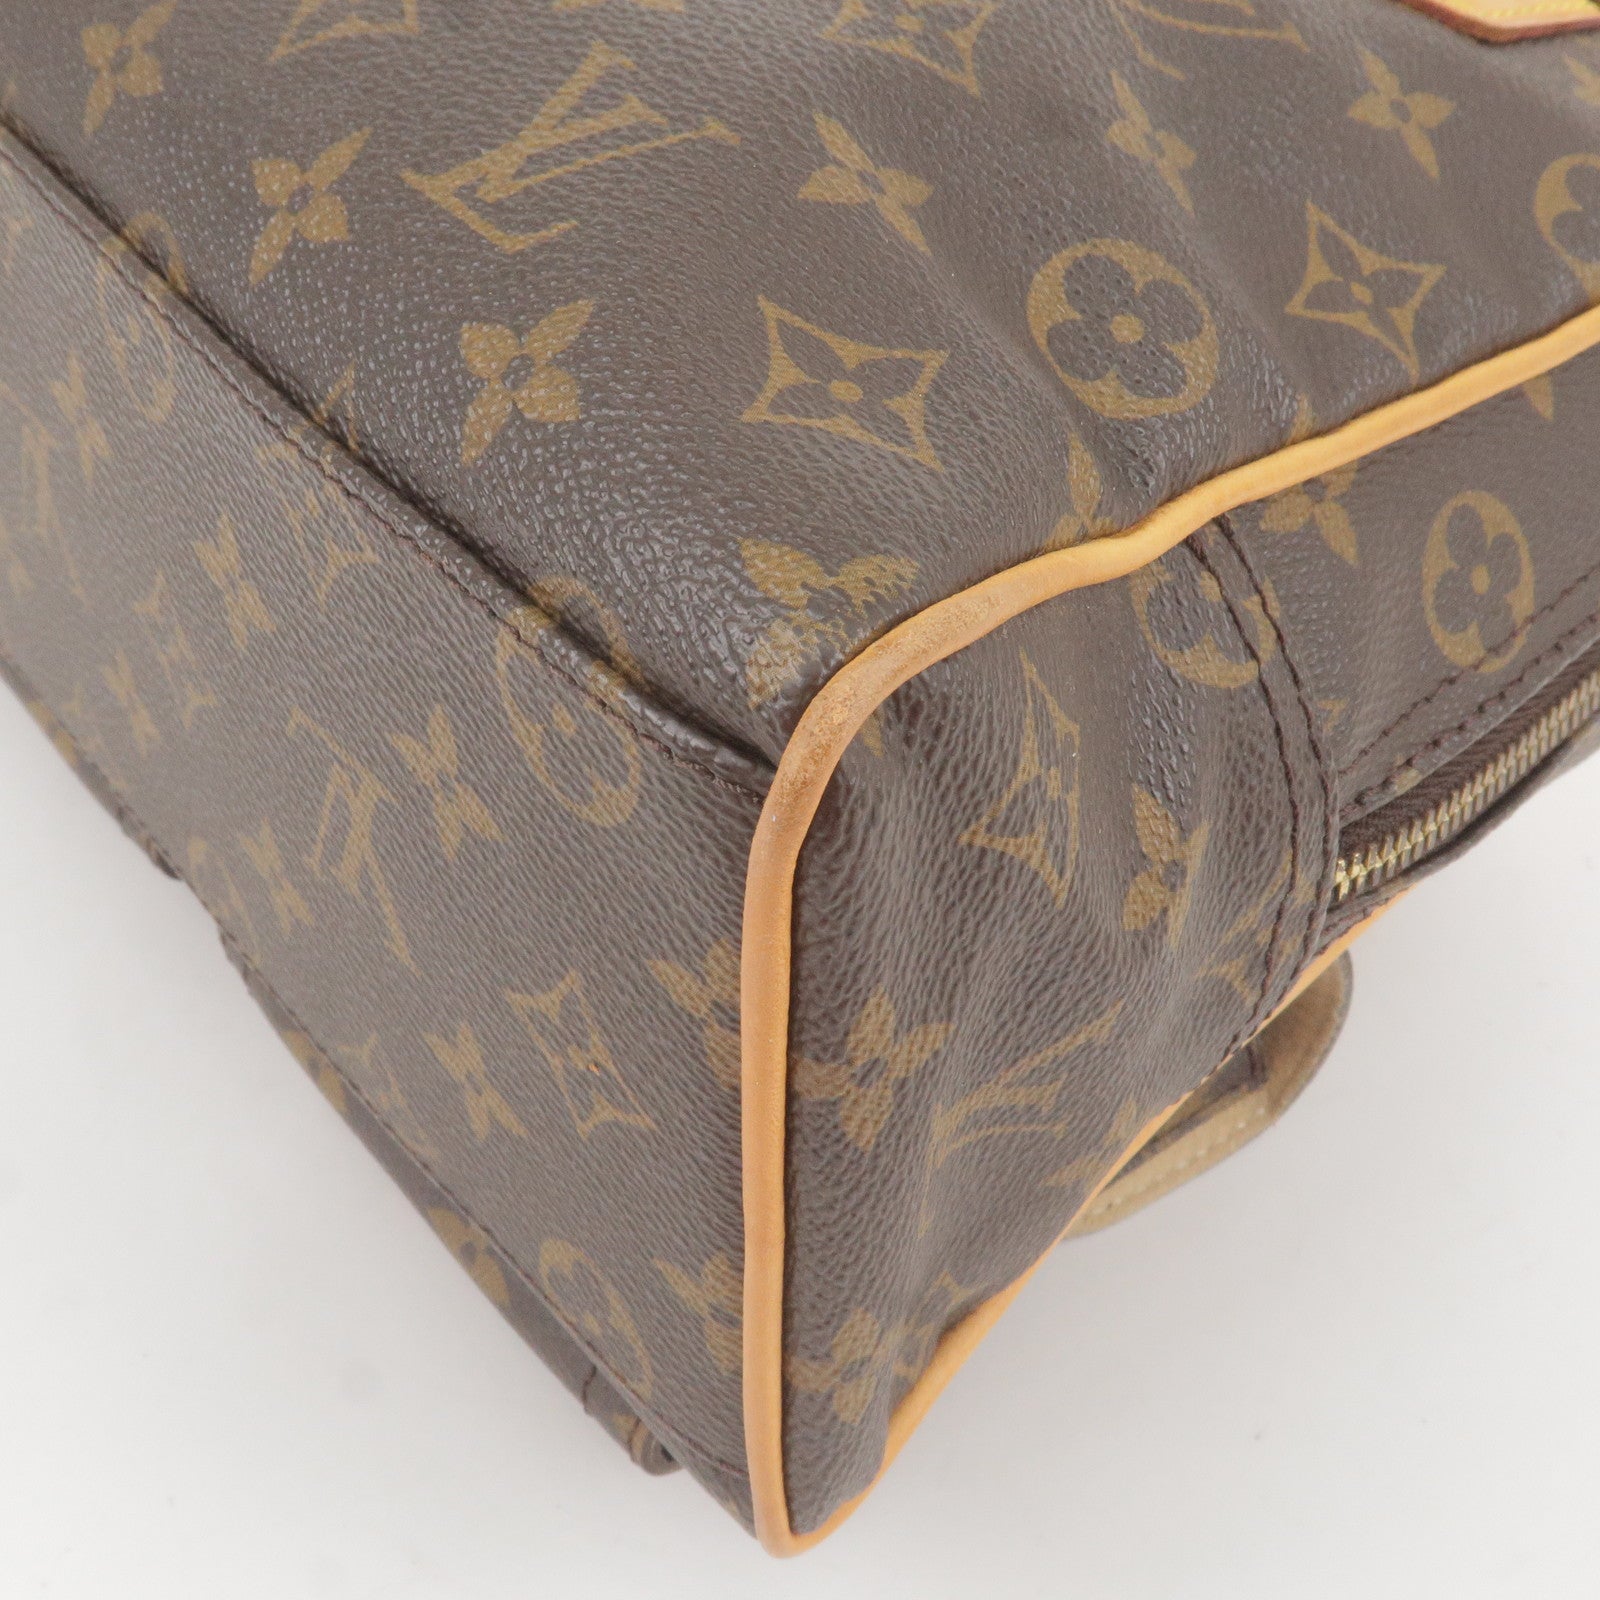 Louis - Manhattan - M40026 – dct - Vuitton - double reveal in Louis Vuitton  - Bag - PM - ep_vintage luxury Store - Hand - Monogram